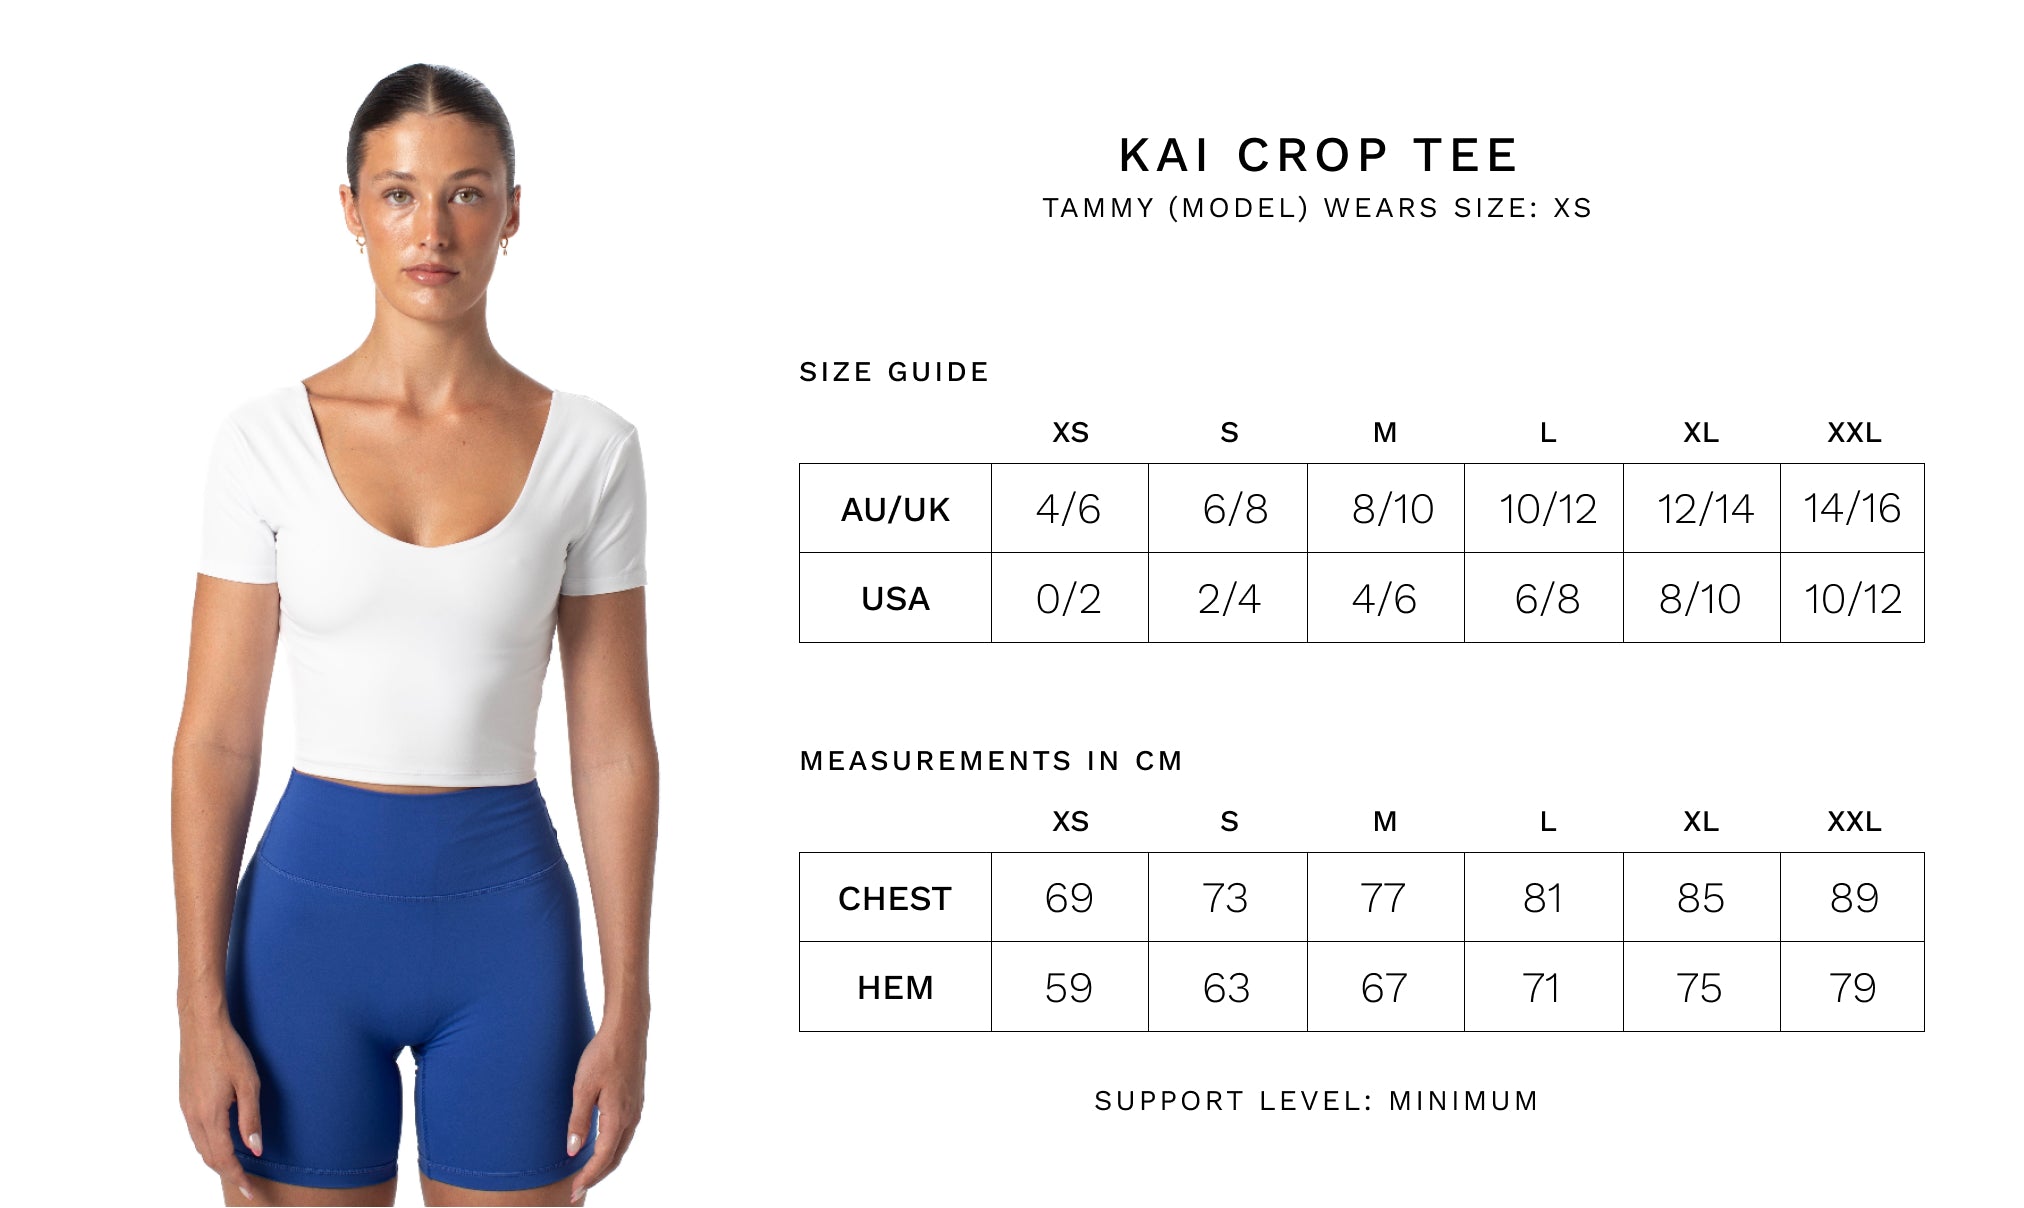 KAI CROP TEE - Size Guide